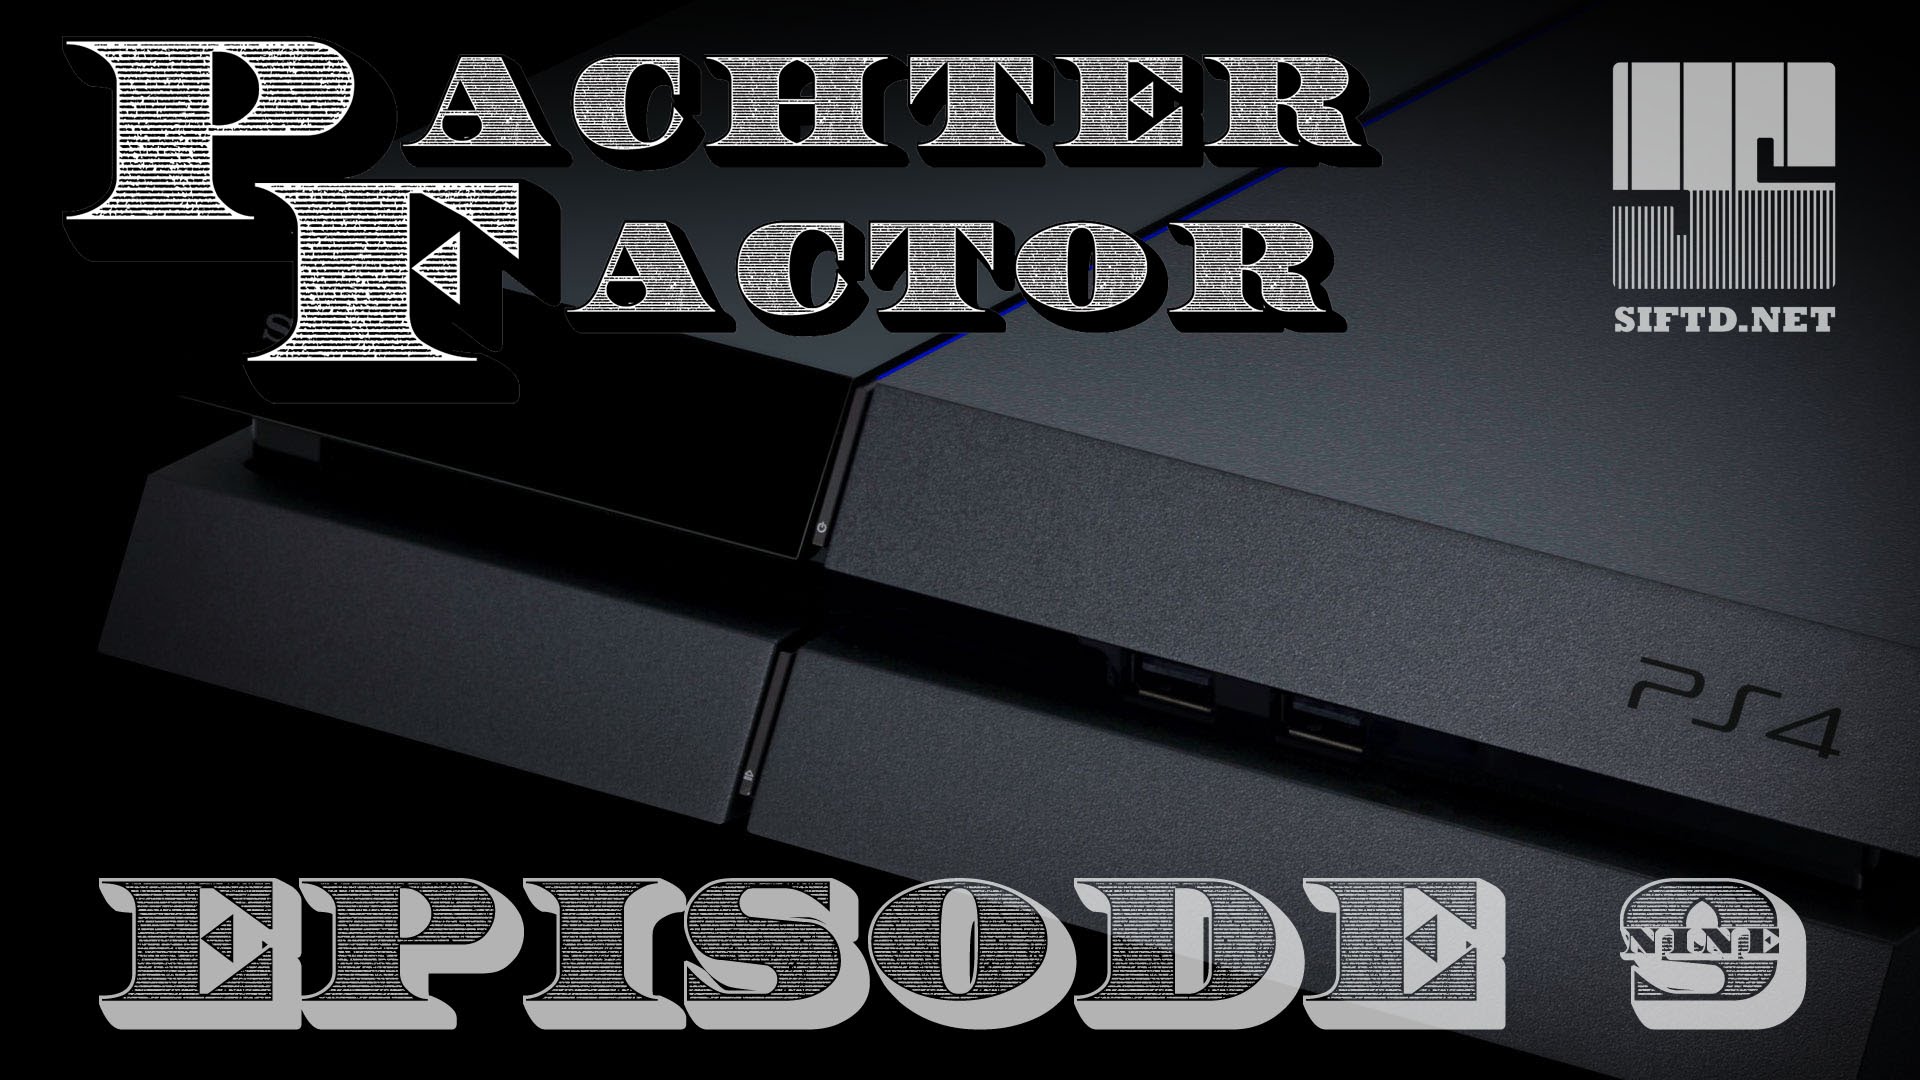 Pachter Factor episodio 9